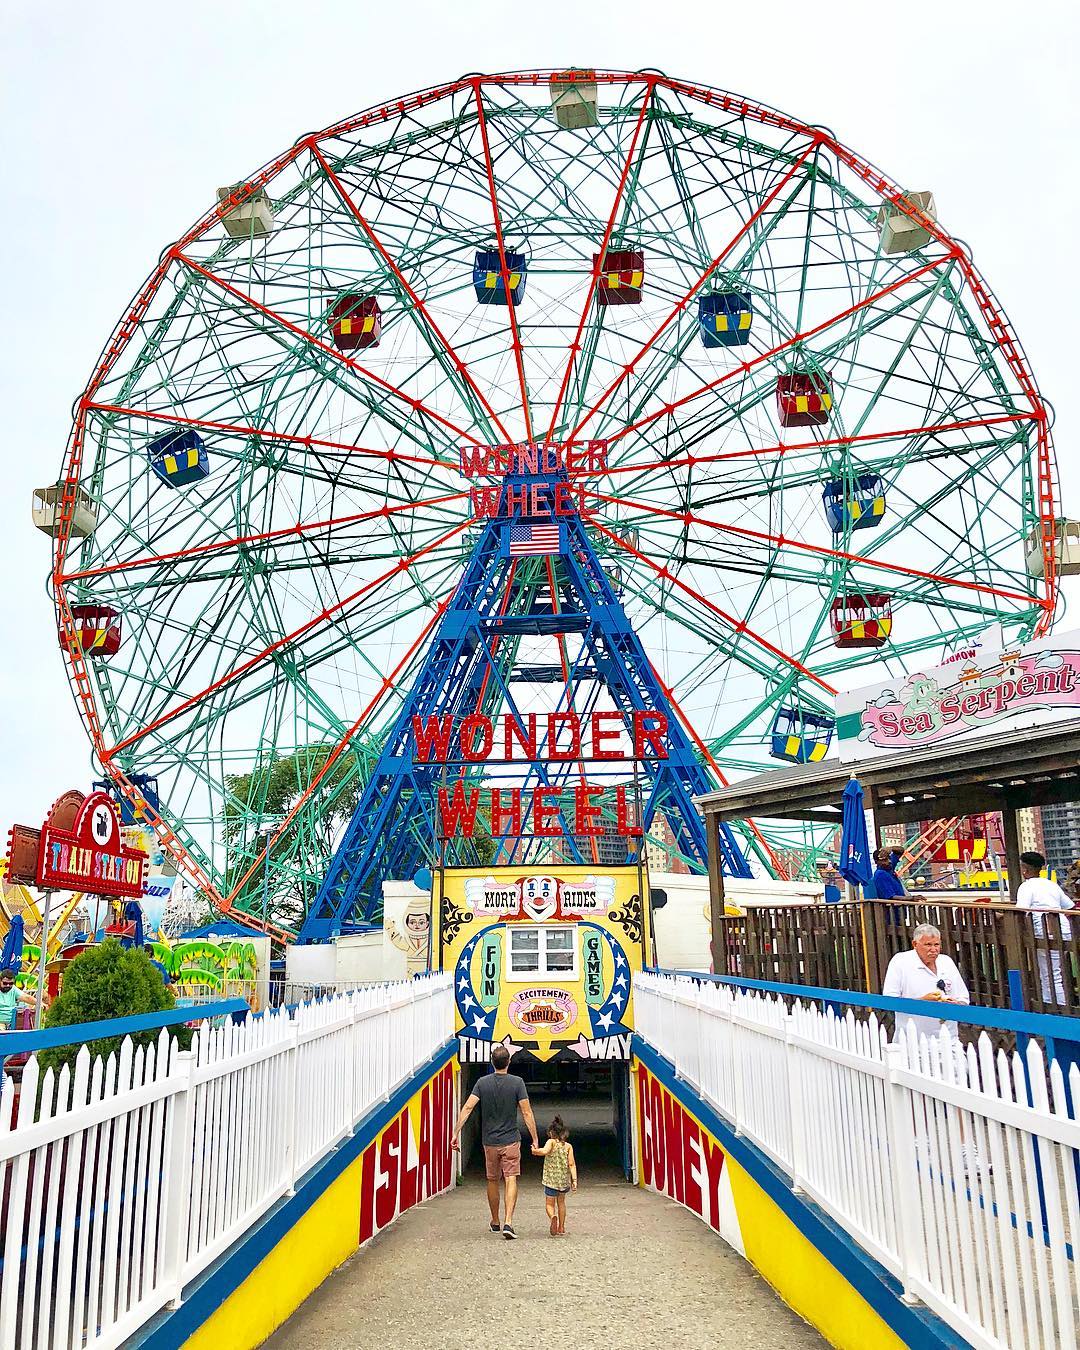 Large Wonder Wheel ferris wheel at Coney Island Photo by Instagram user @misschloenyc